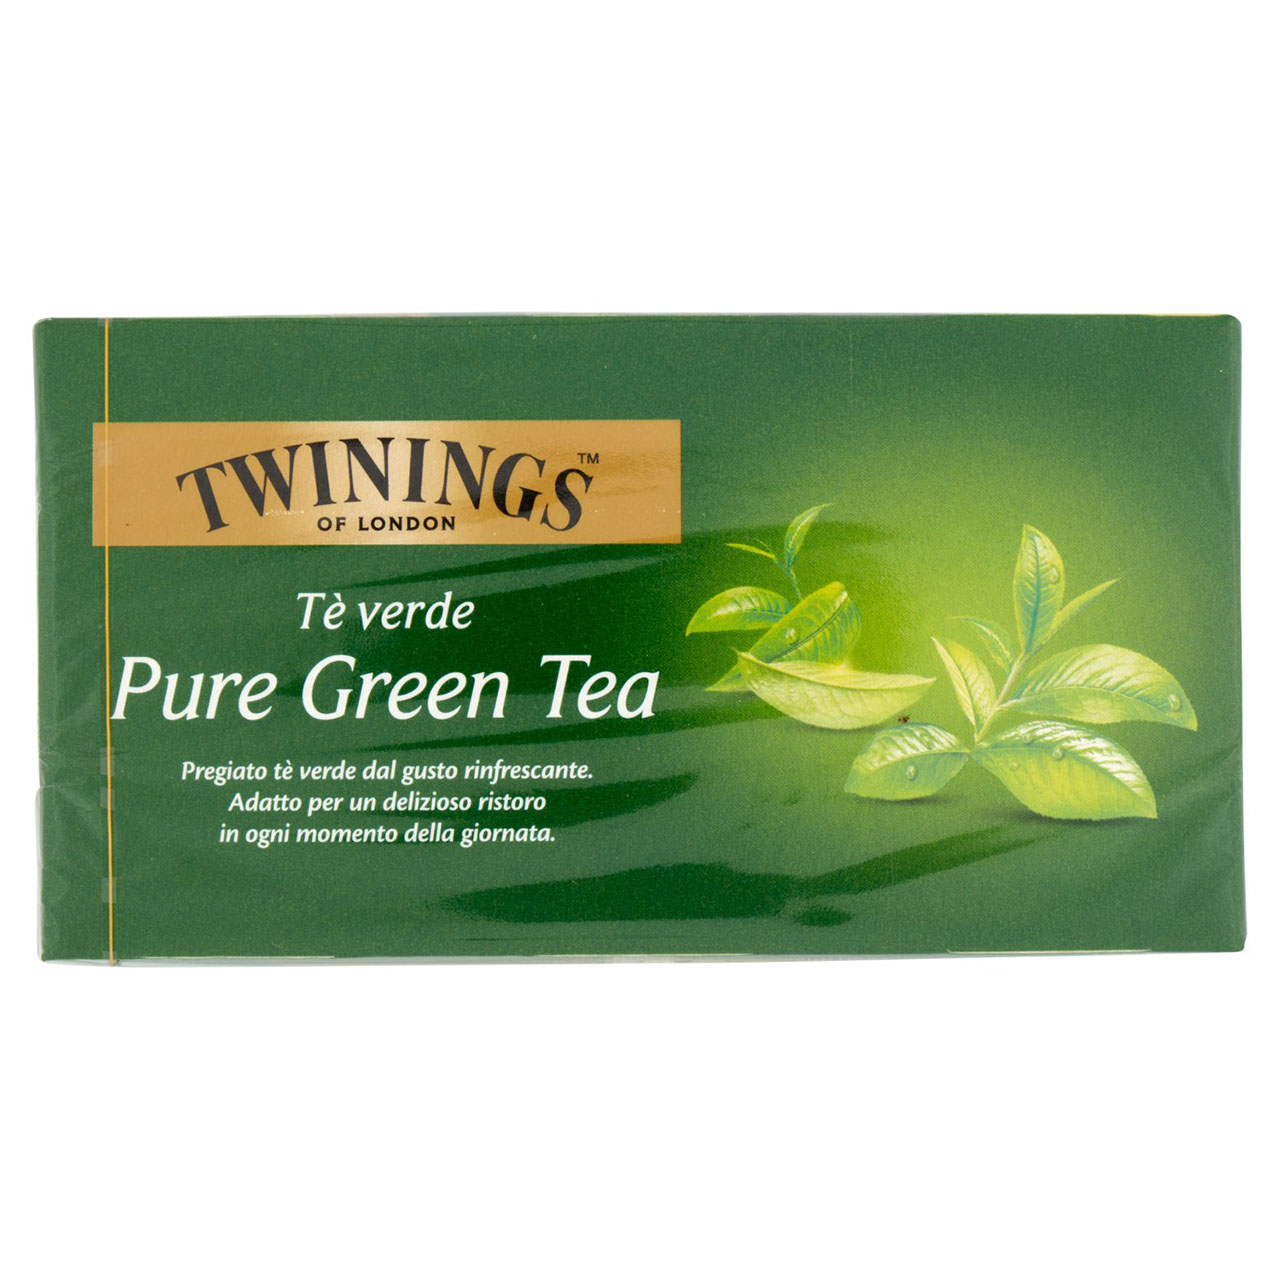 Twinings Tè verde Pure Green Tea 20 x 2 g